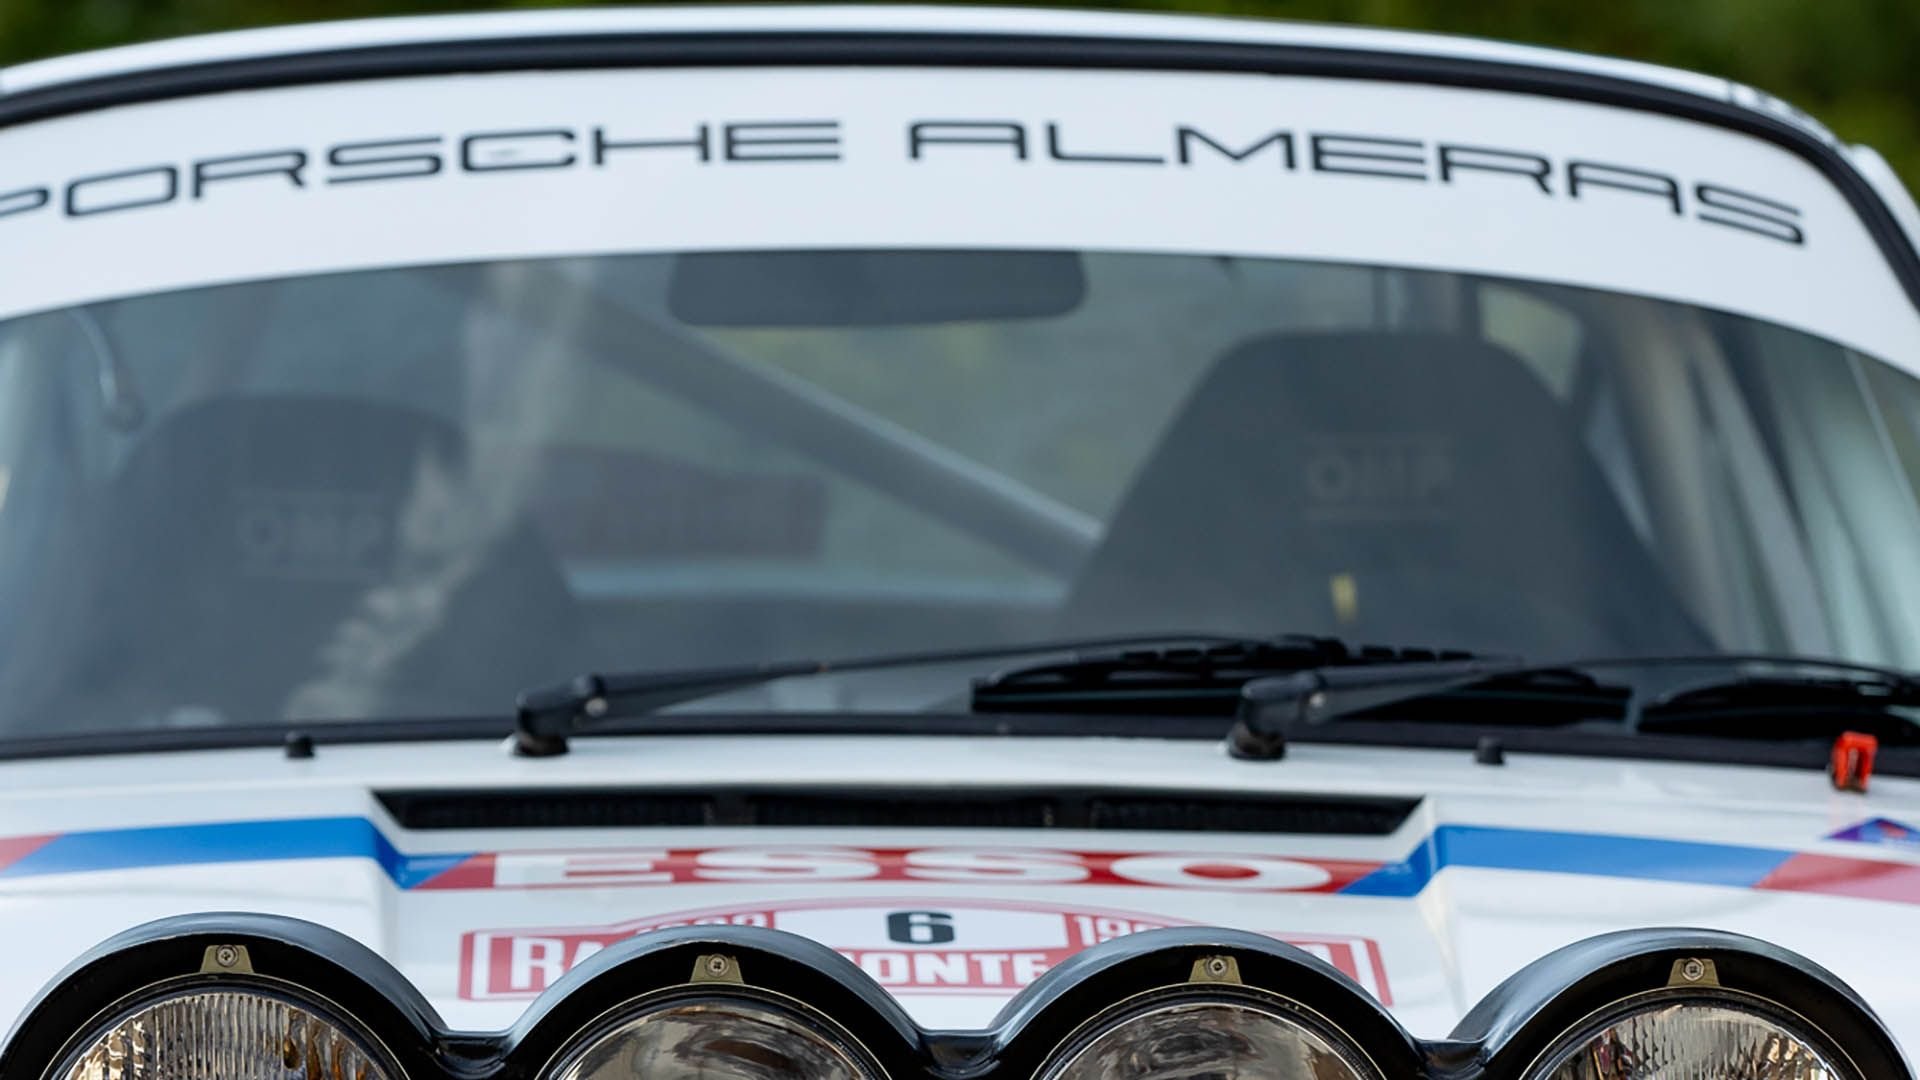 For Sale 1979 Porsche 911 SC Alméras Frères 'Eminence' Rally Tribute